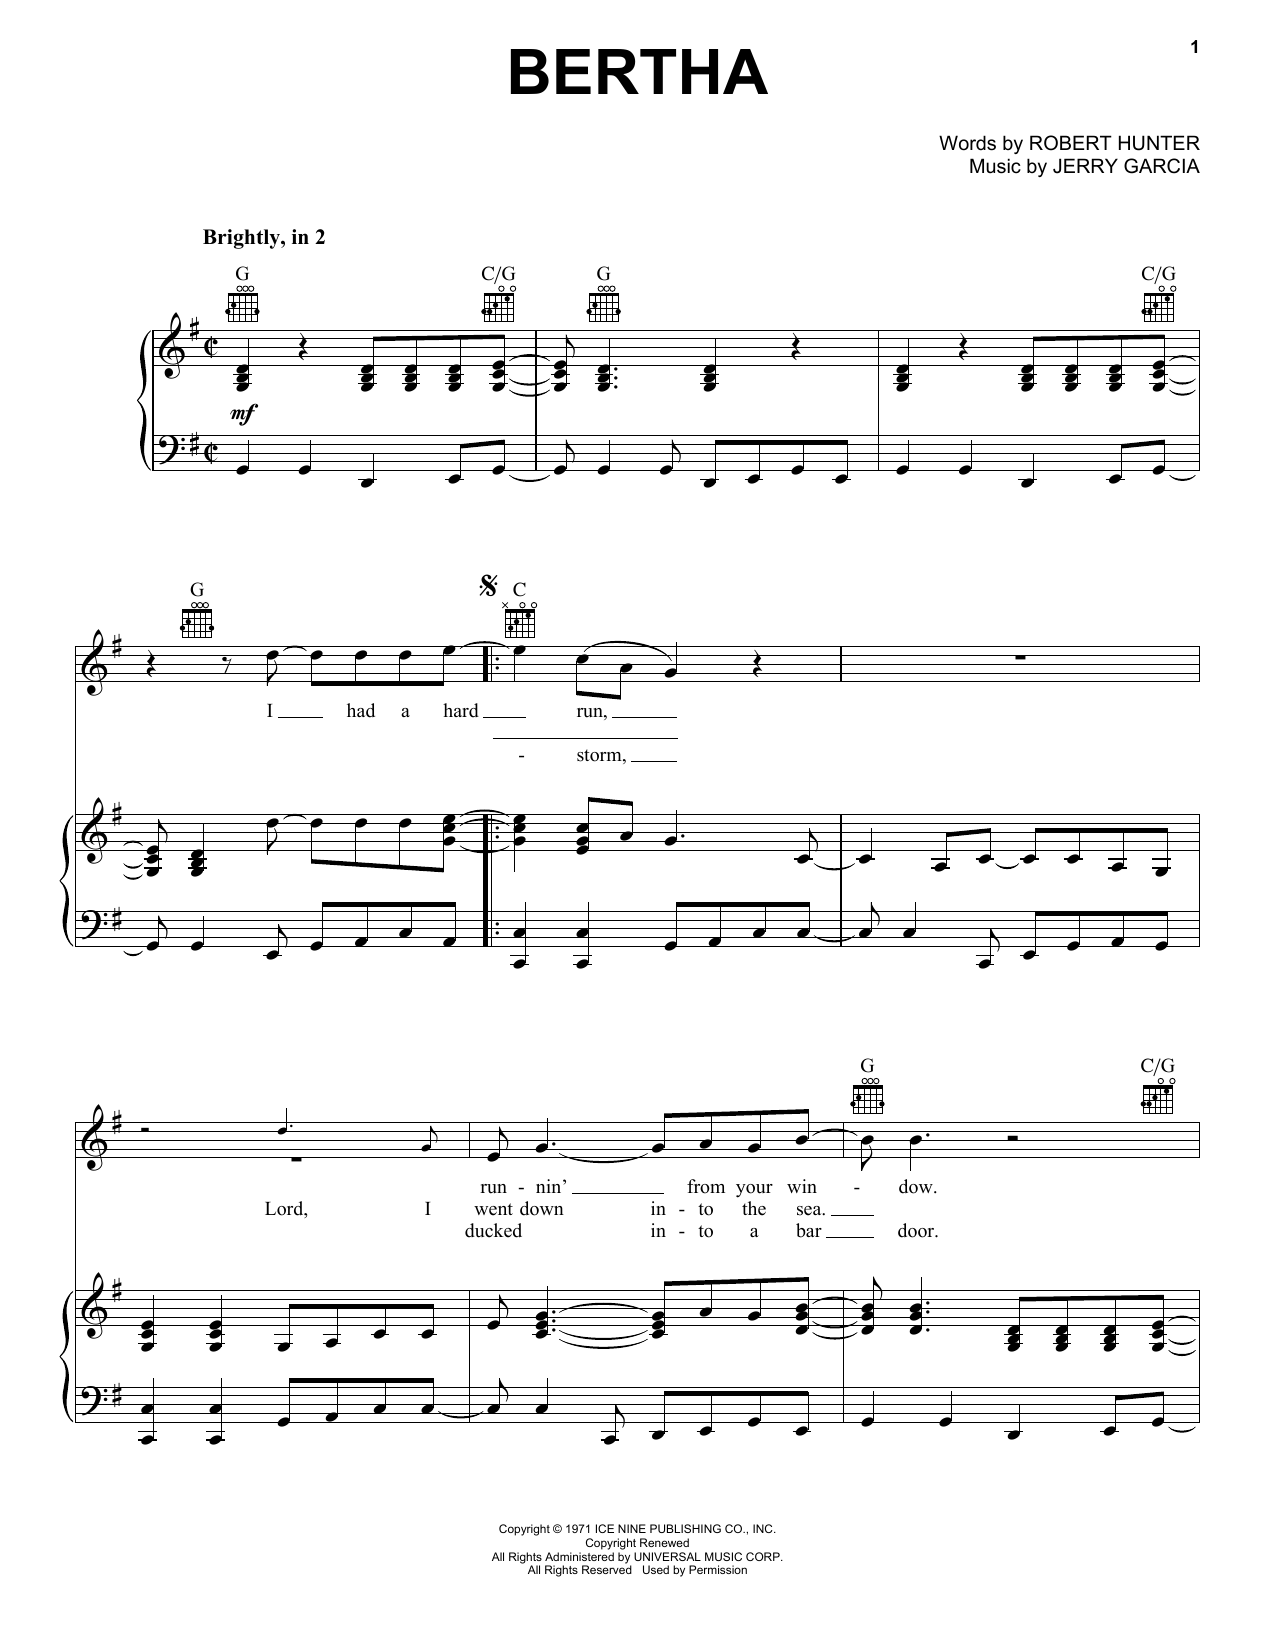 Grateful Dead Bertha Sheet Music Notes & Chords for Guitar Tab - Download or Print PDF